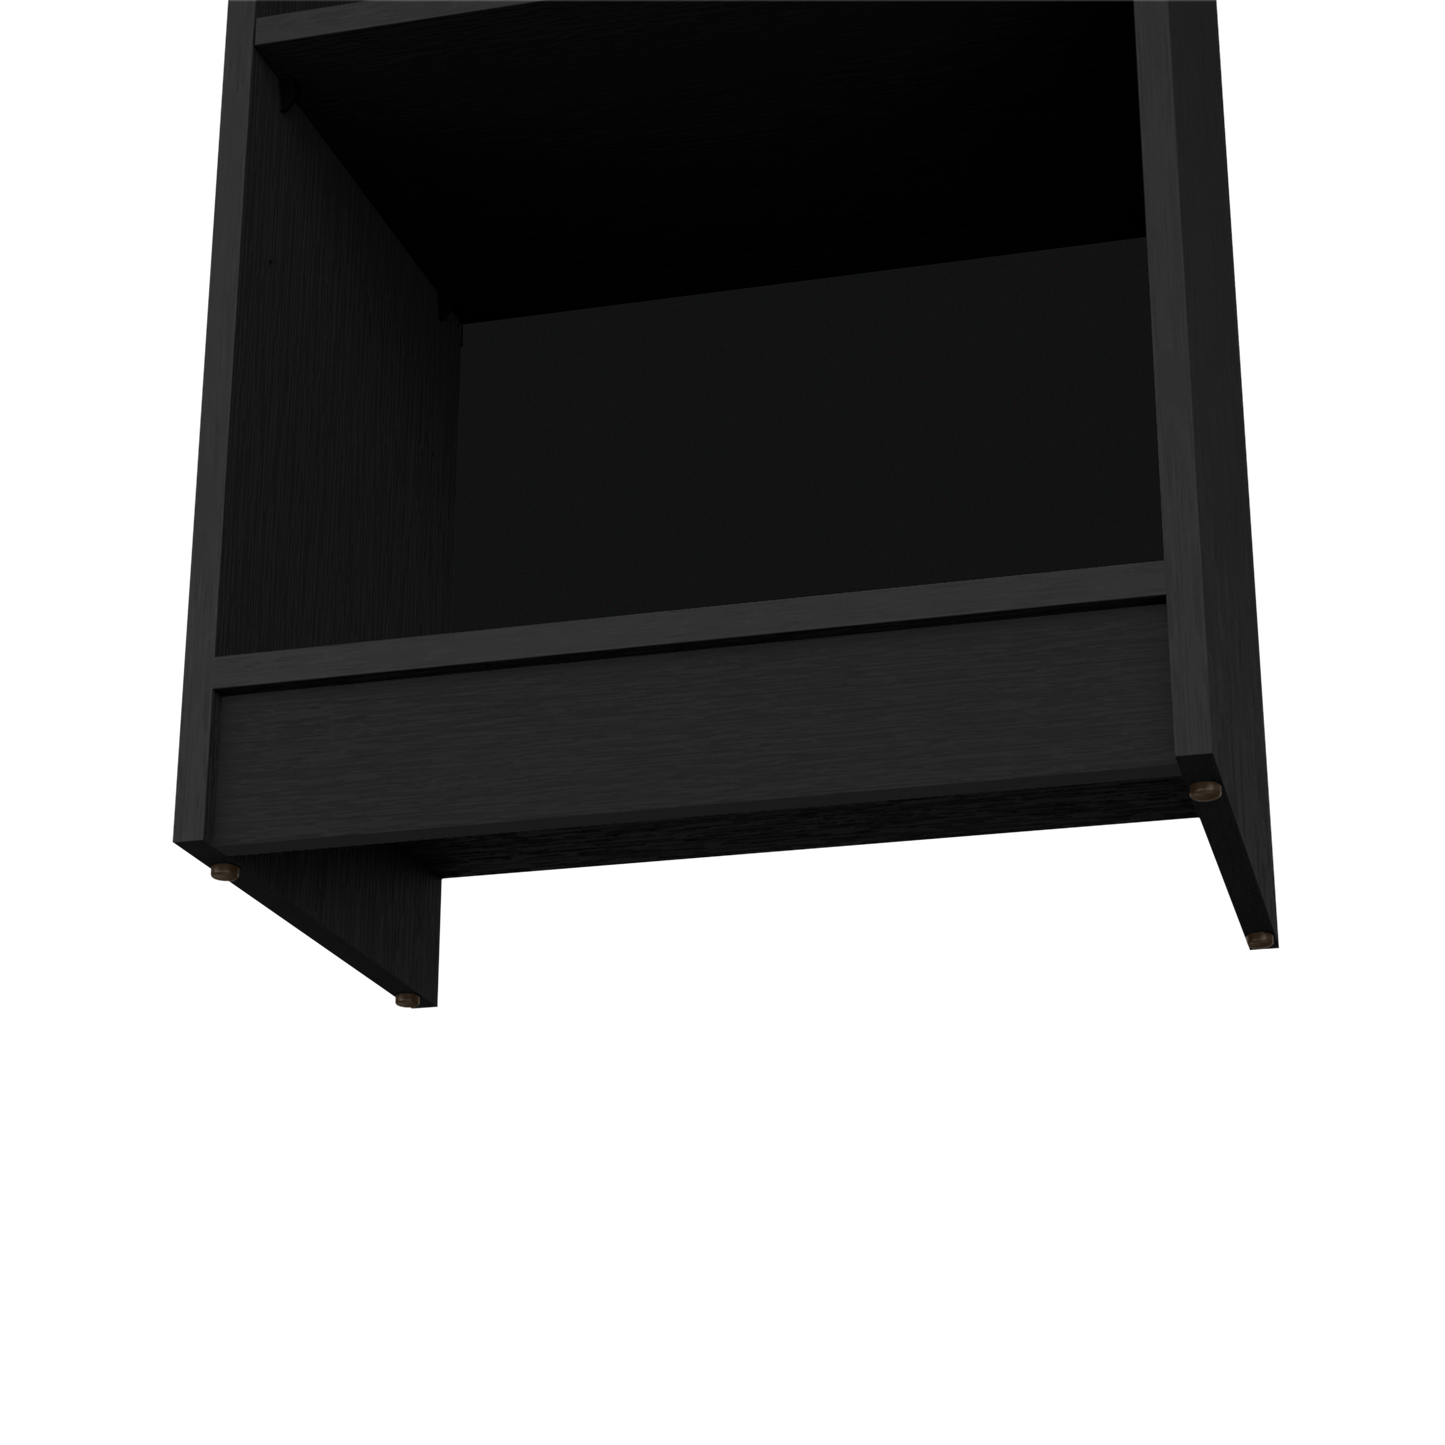 DEPOT E-SHOP Vinton XS Bookcase Compact Bookshelf with Multiple Shelves, Black